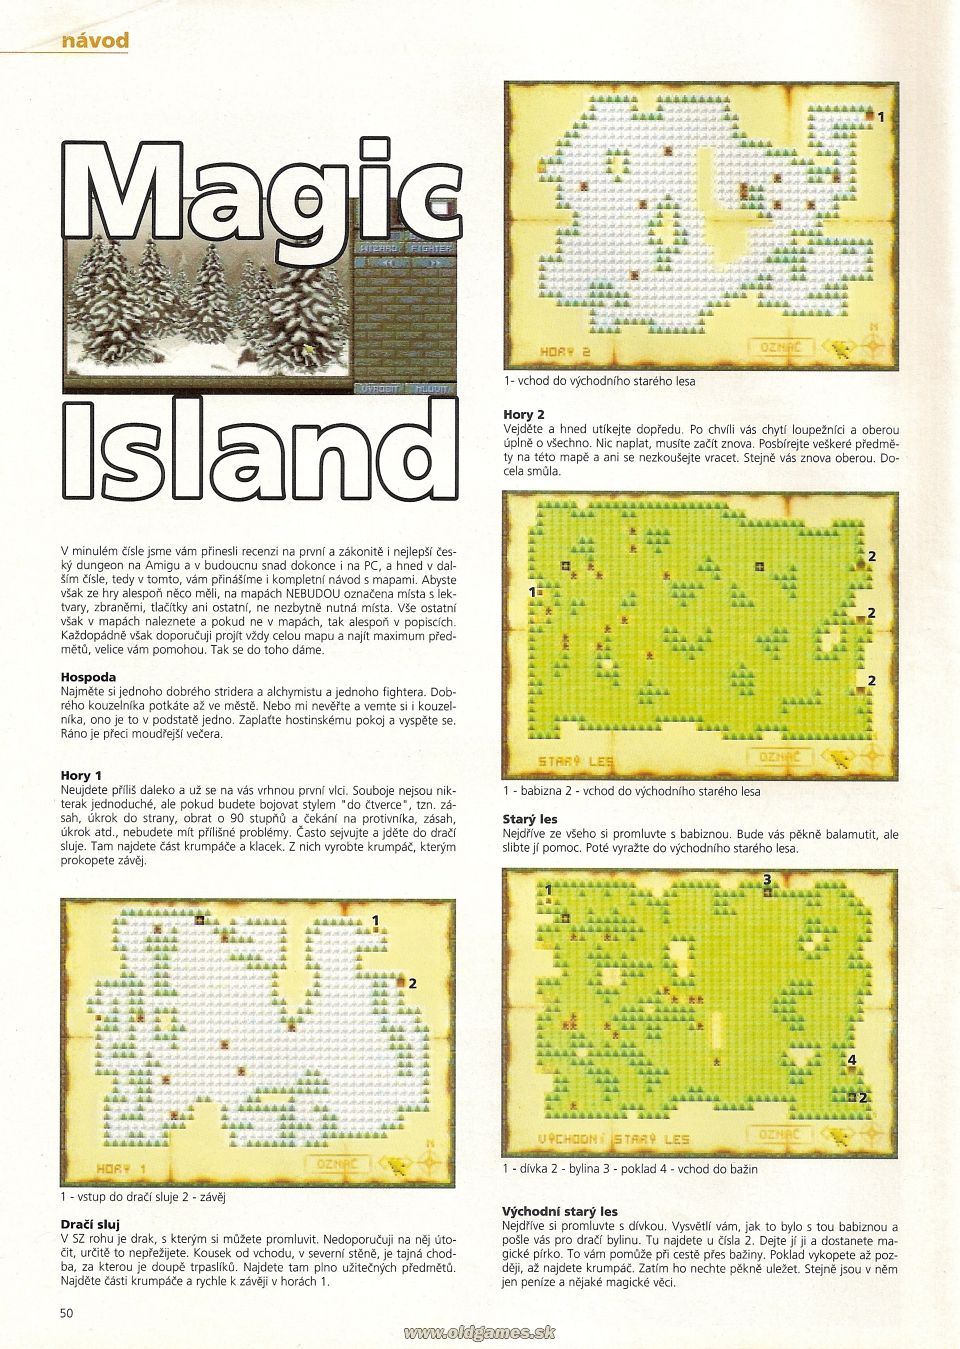 Magic Island - Návod, Mapy (1)